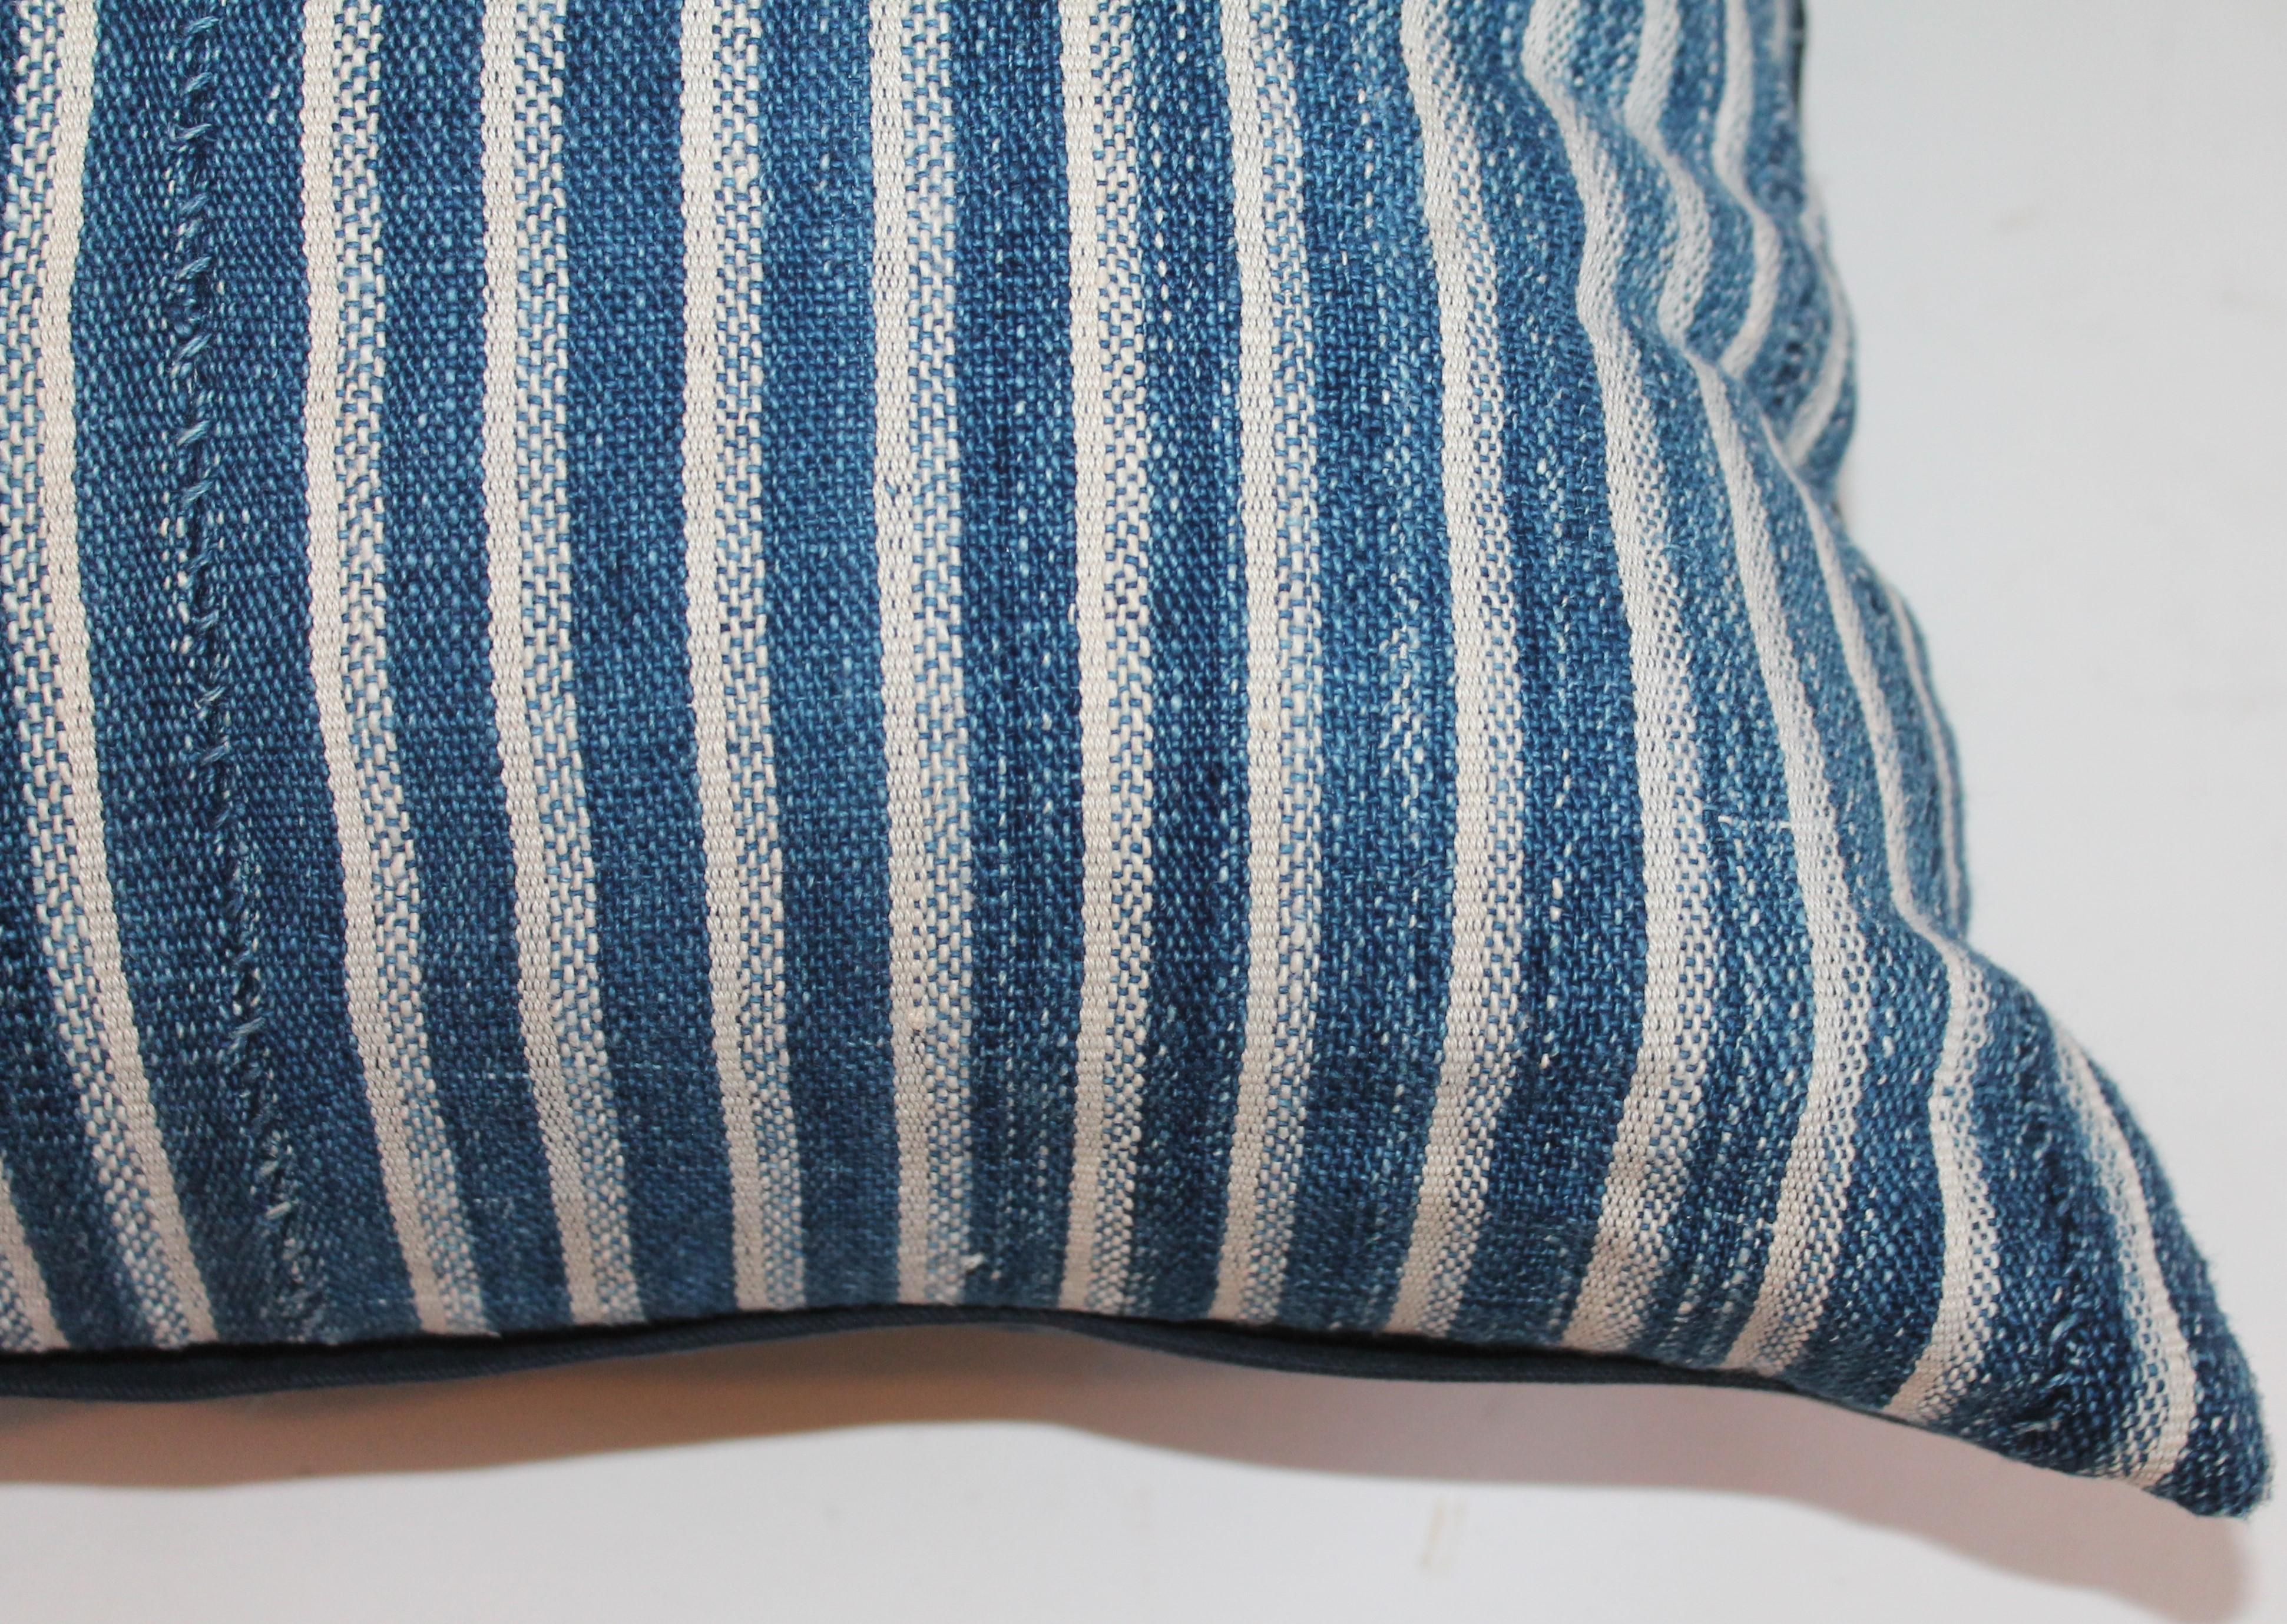 American Indigo Blue and White Striped Linen Pillows